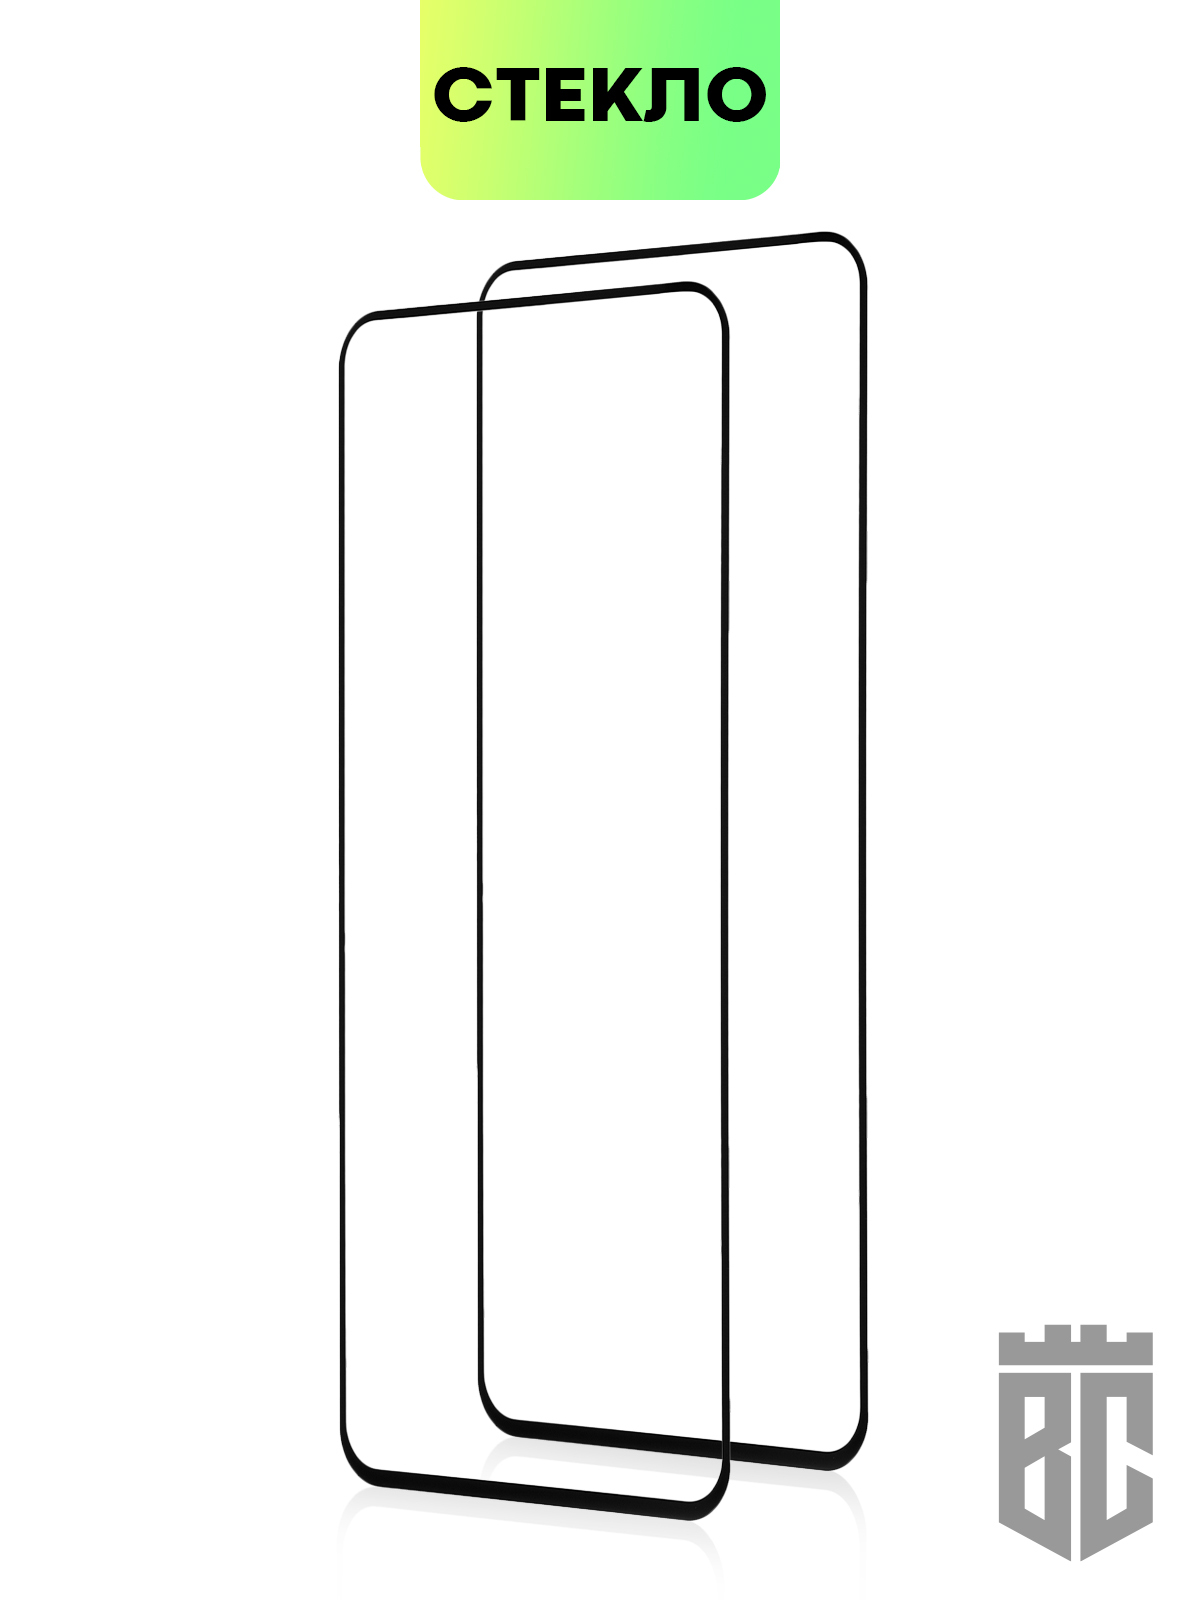 Стекло note 11 pro. Xiaomi Redmi Note 11 s защитное стекло. Redmi Note 11 стекло. Защитное стекло на редми нот 11. Redmi Note 11 Pro защитное стекло.